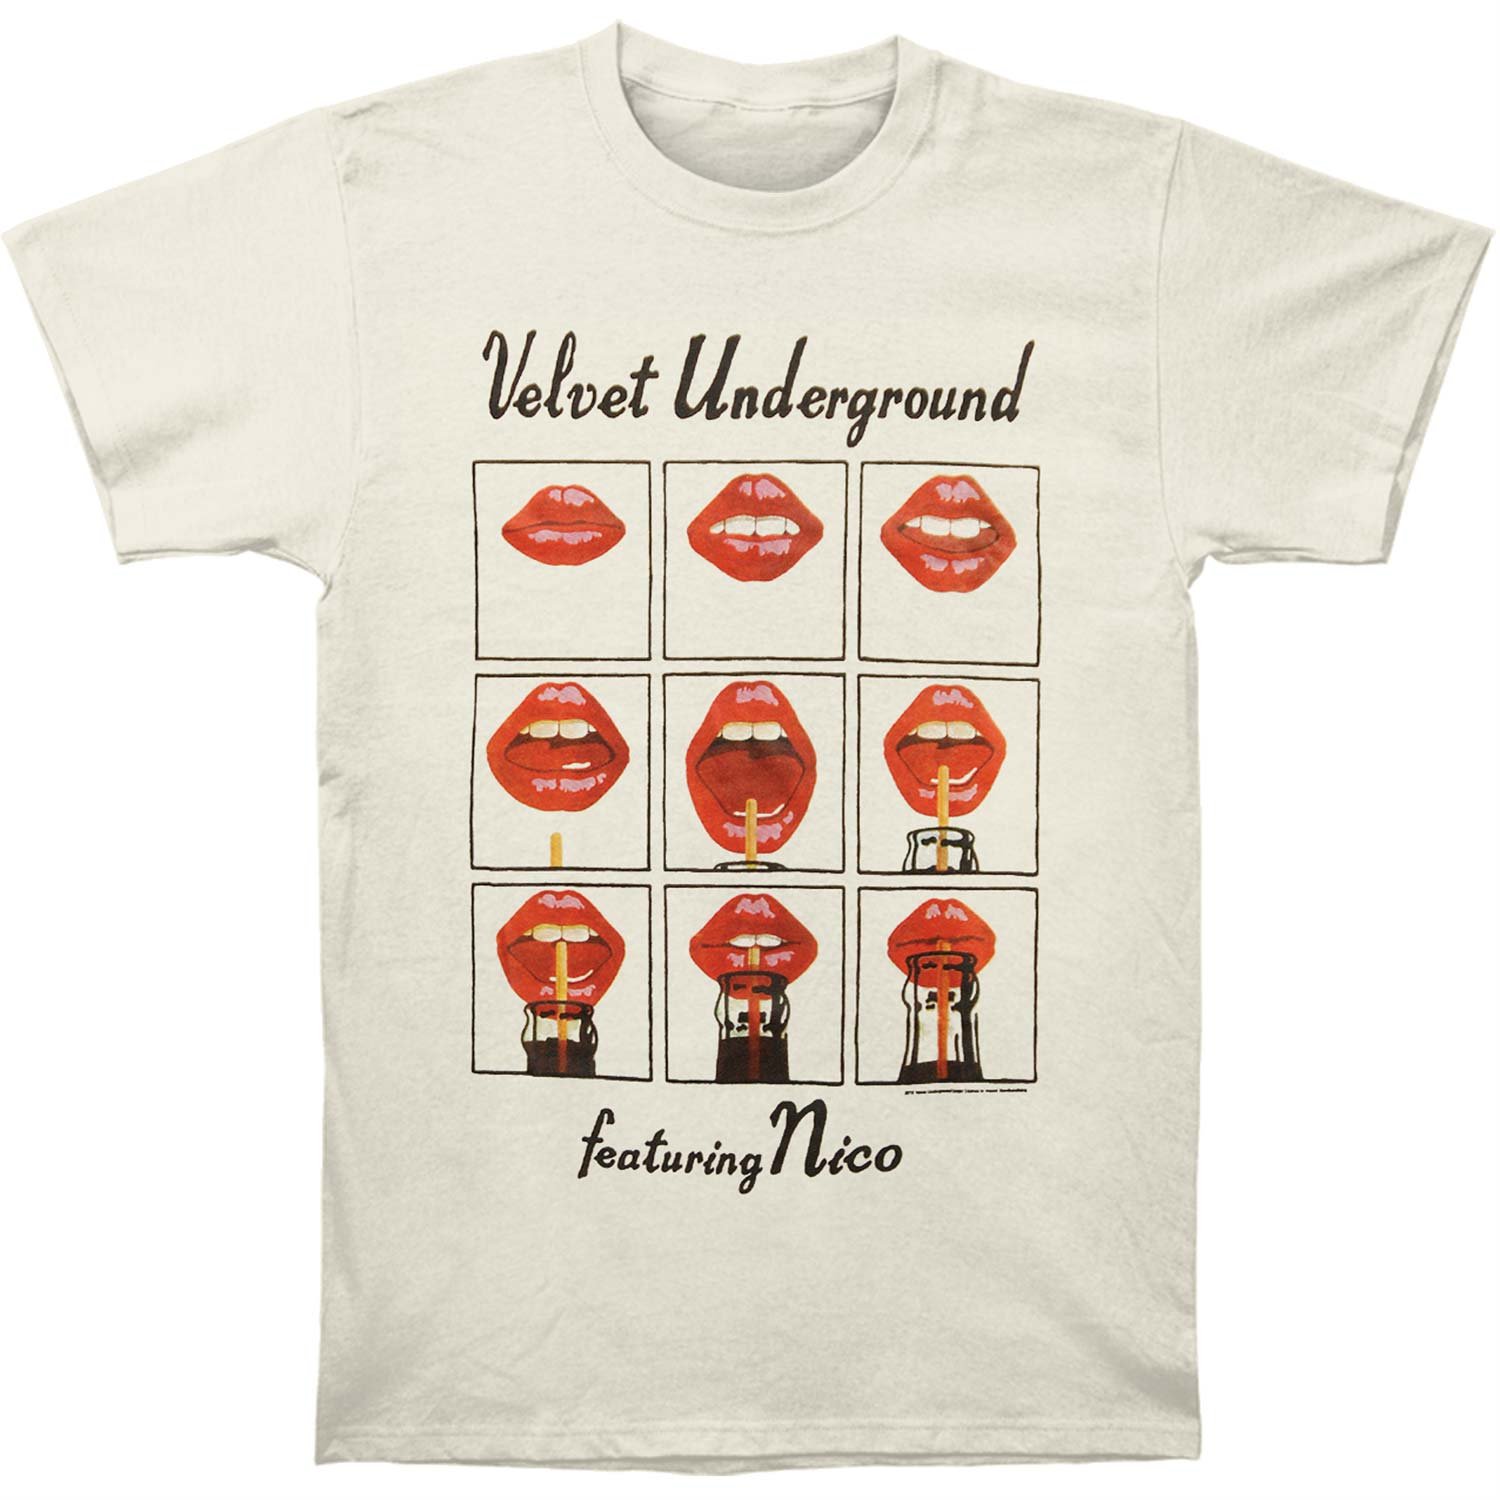 band t shirts - Velvet Underground - Featuring Nico Soft T-Shirt Vintage White